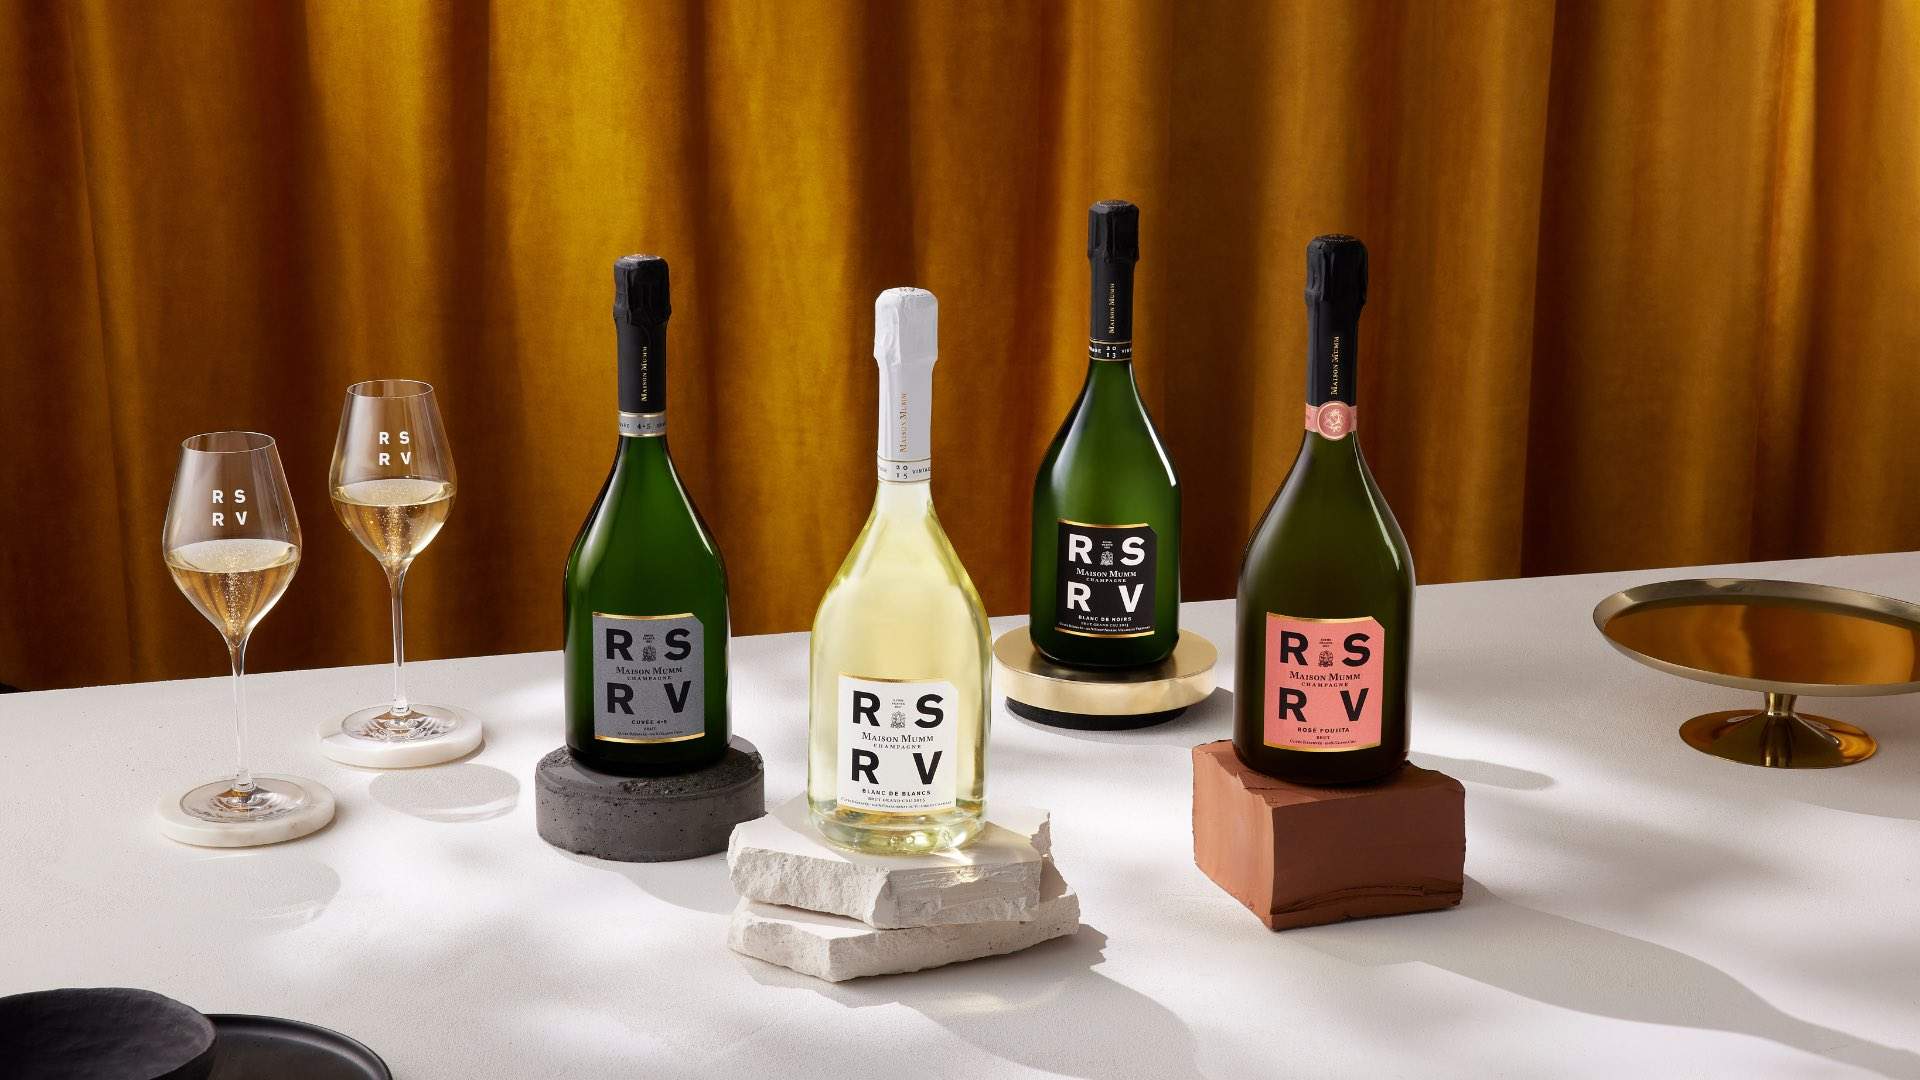 Four bottles of Maison Mumm's RSRV wines on a table.